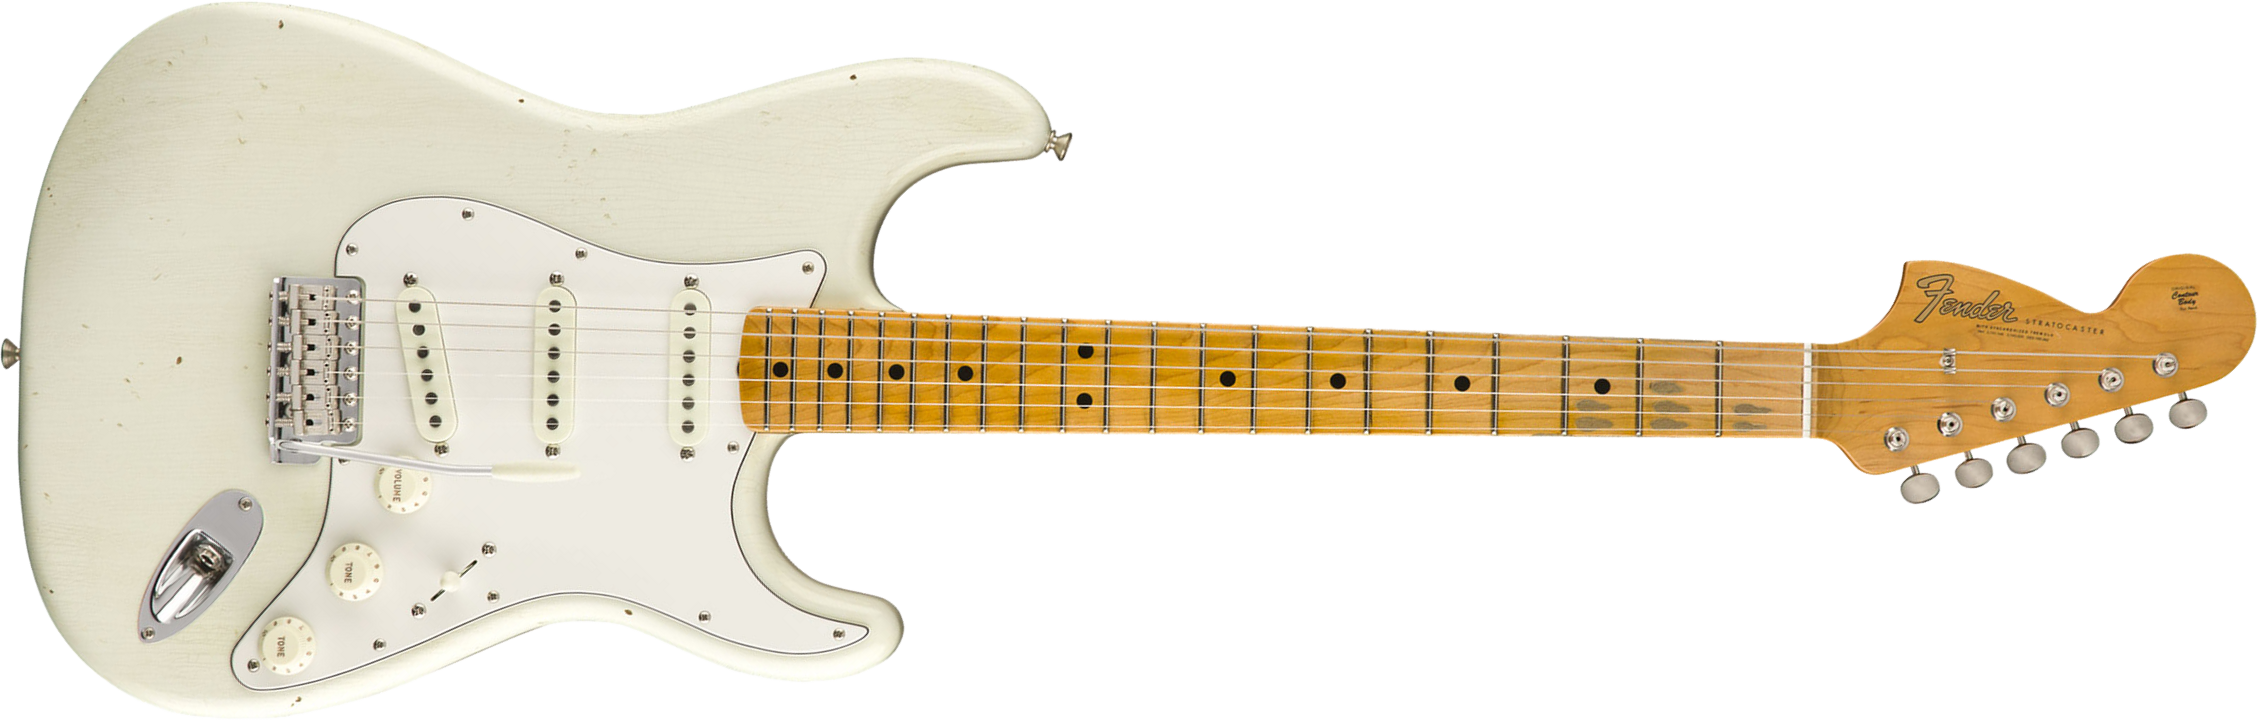 Fender Custom Shop Jimi Hendrix Strat Voodoo Child Signature 2018 Mn - Journeyman Relic Olympic White - Guitare Électrique Forme Str - Main picture